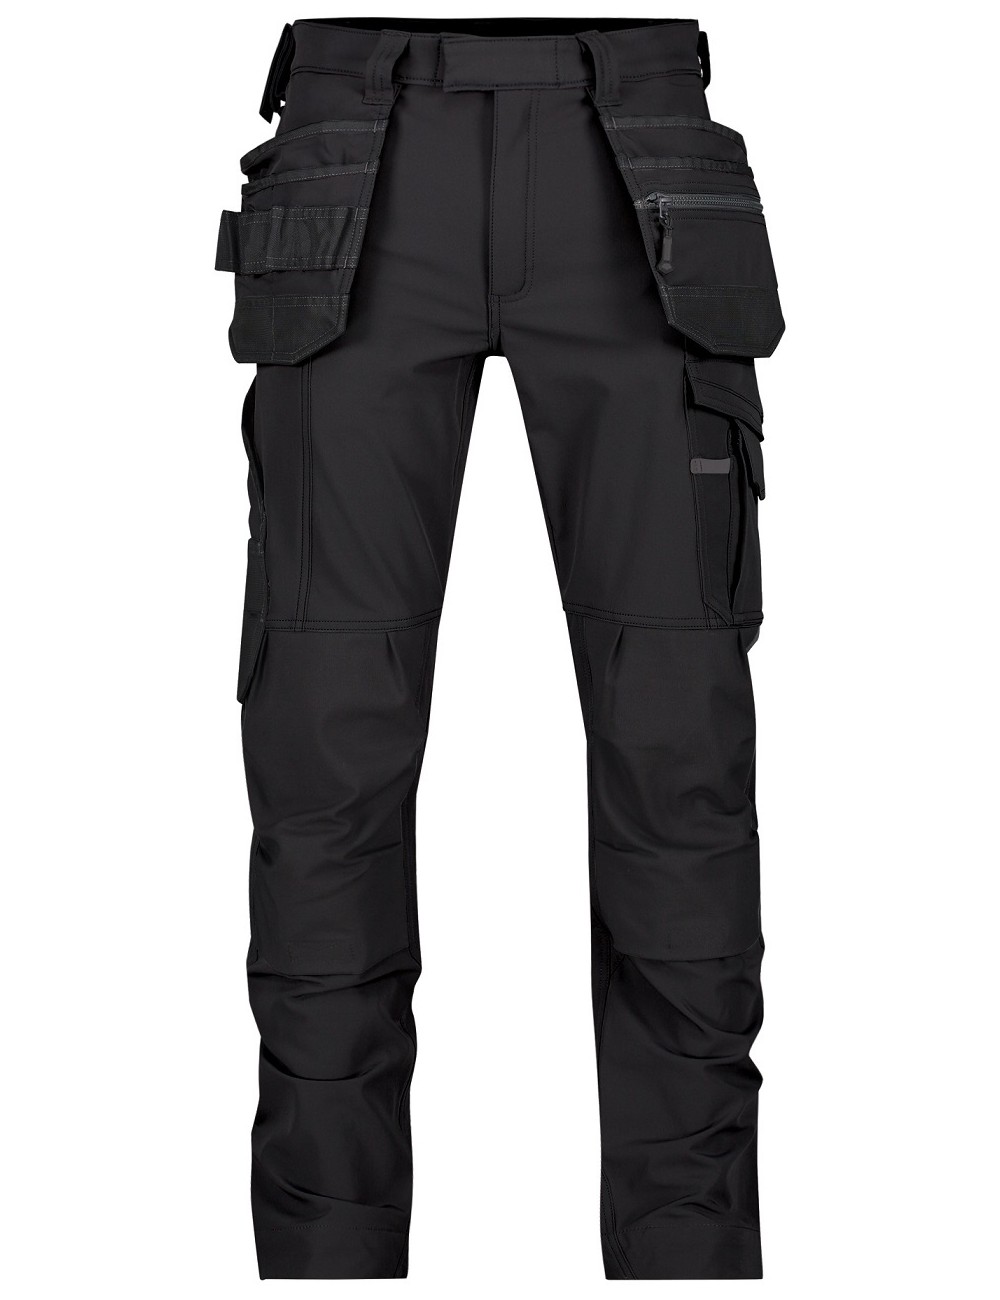 Mens KK Thermal Fleece Lined Elasticated Trousers Cargo Combat Work Pants  Bottoms (Black, Medium) : Amazon.co.uk: Fashion